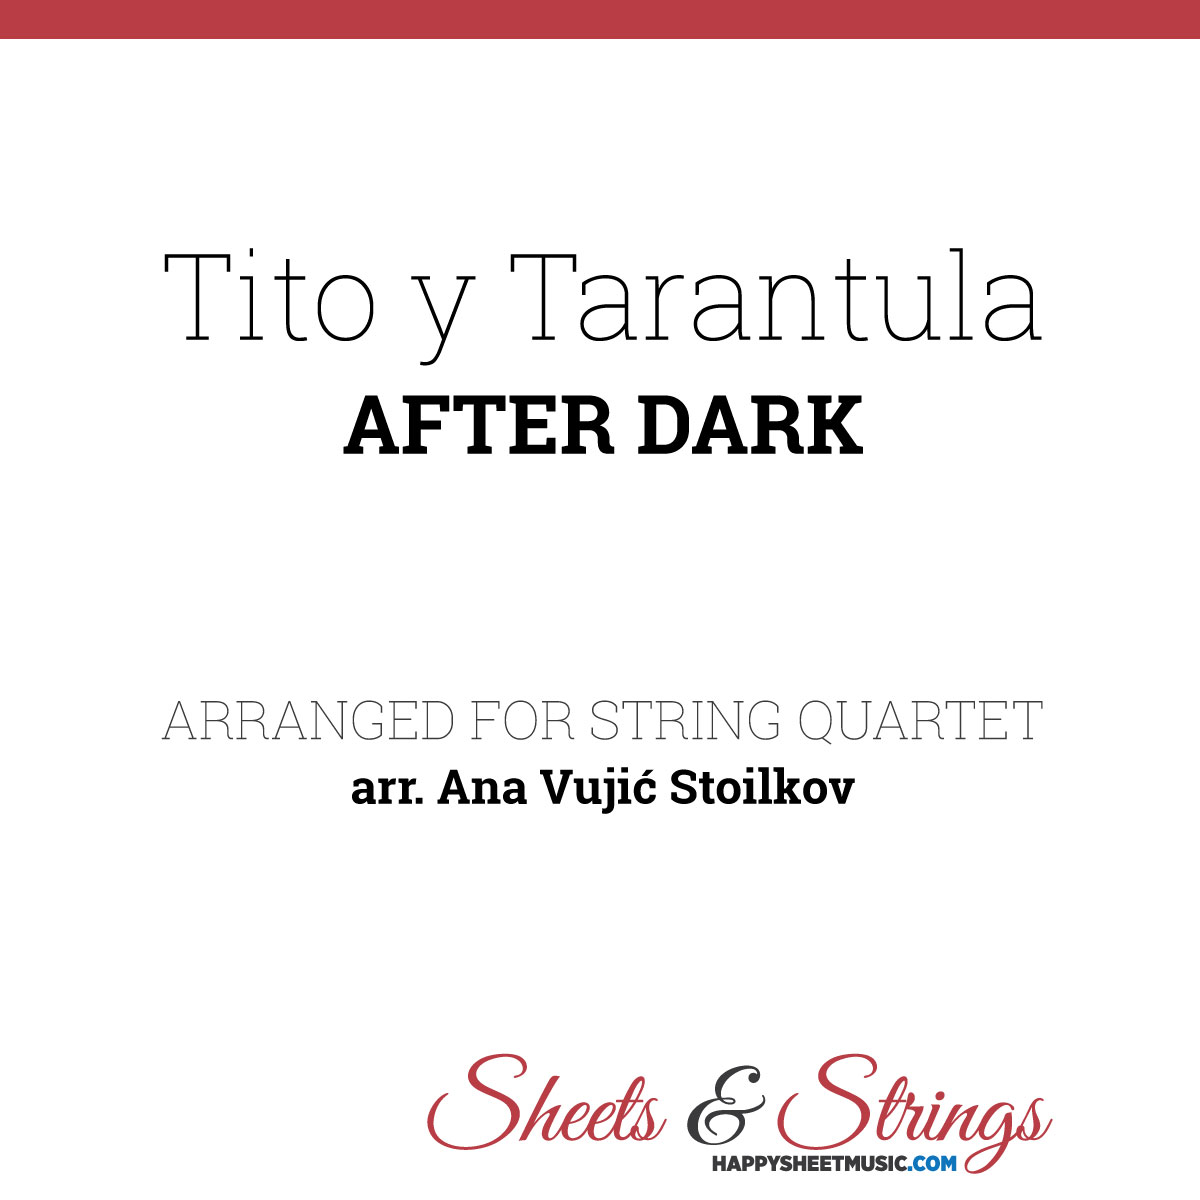 Tito y Tarantula - After Dark Sheet music for String Quartet.